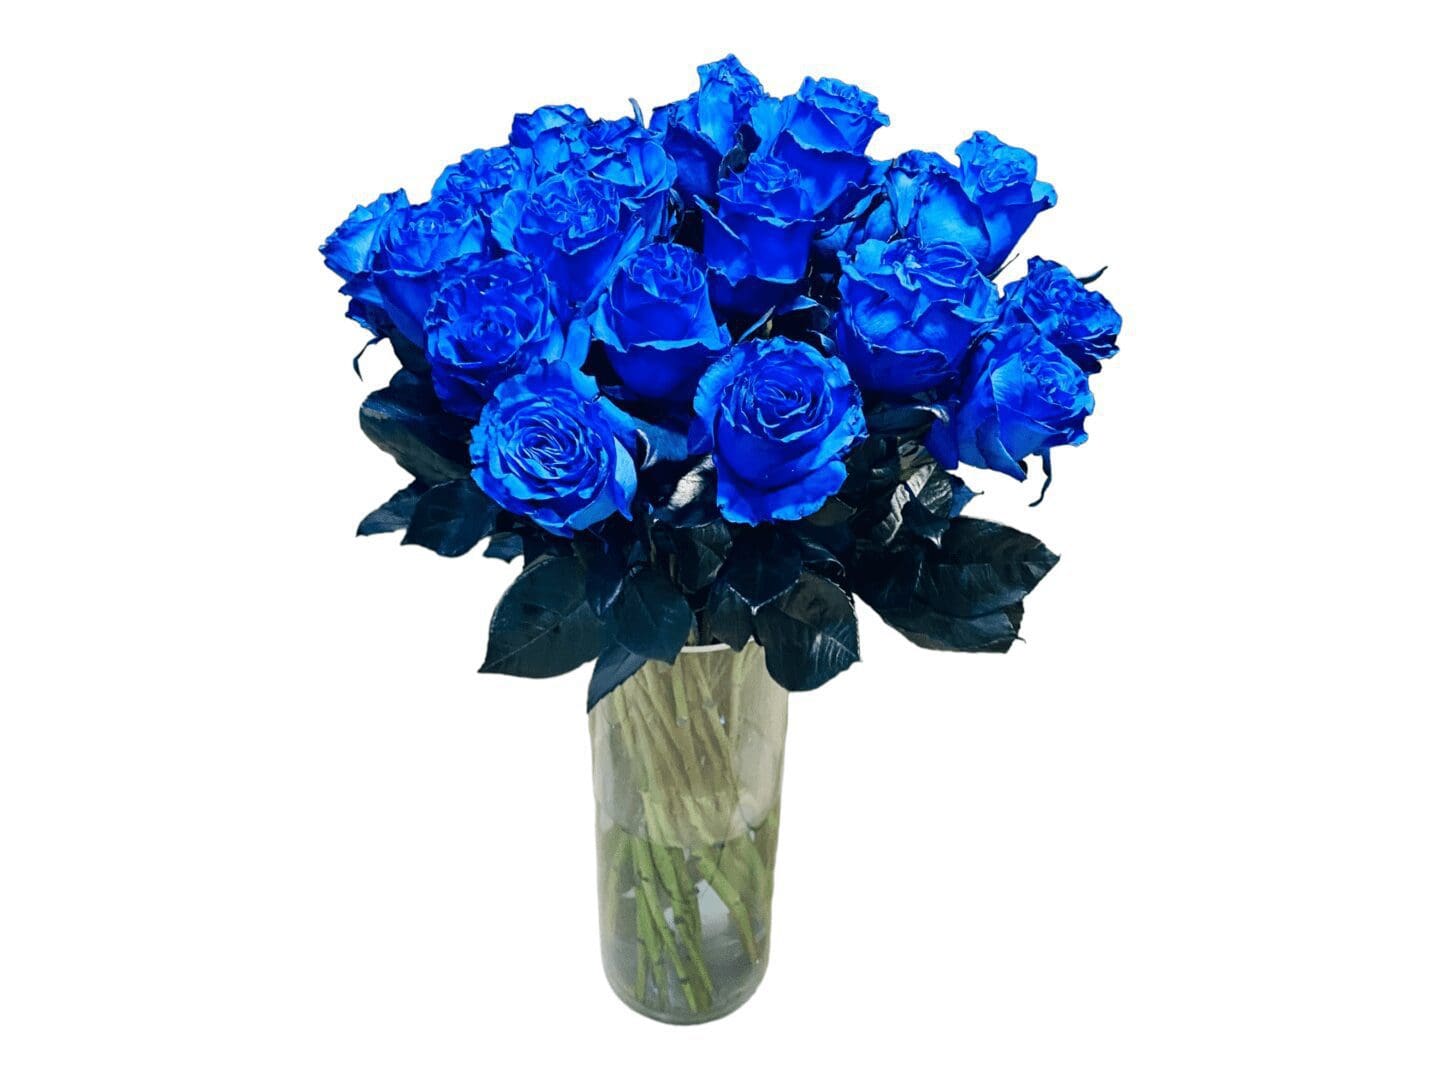 24 blue roses arrangement with a glass vase